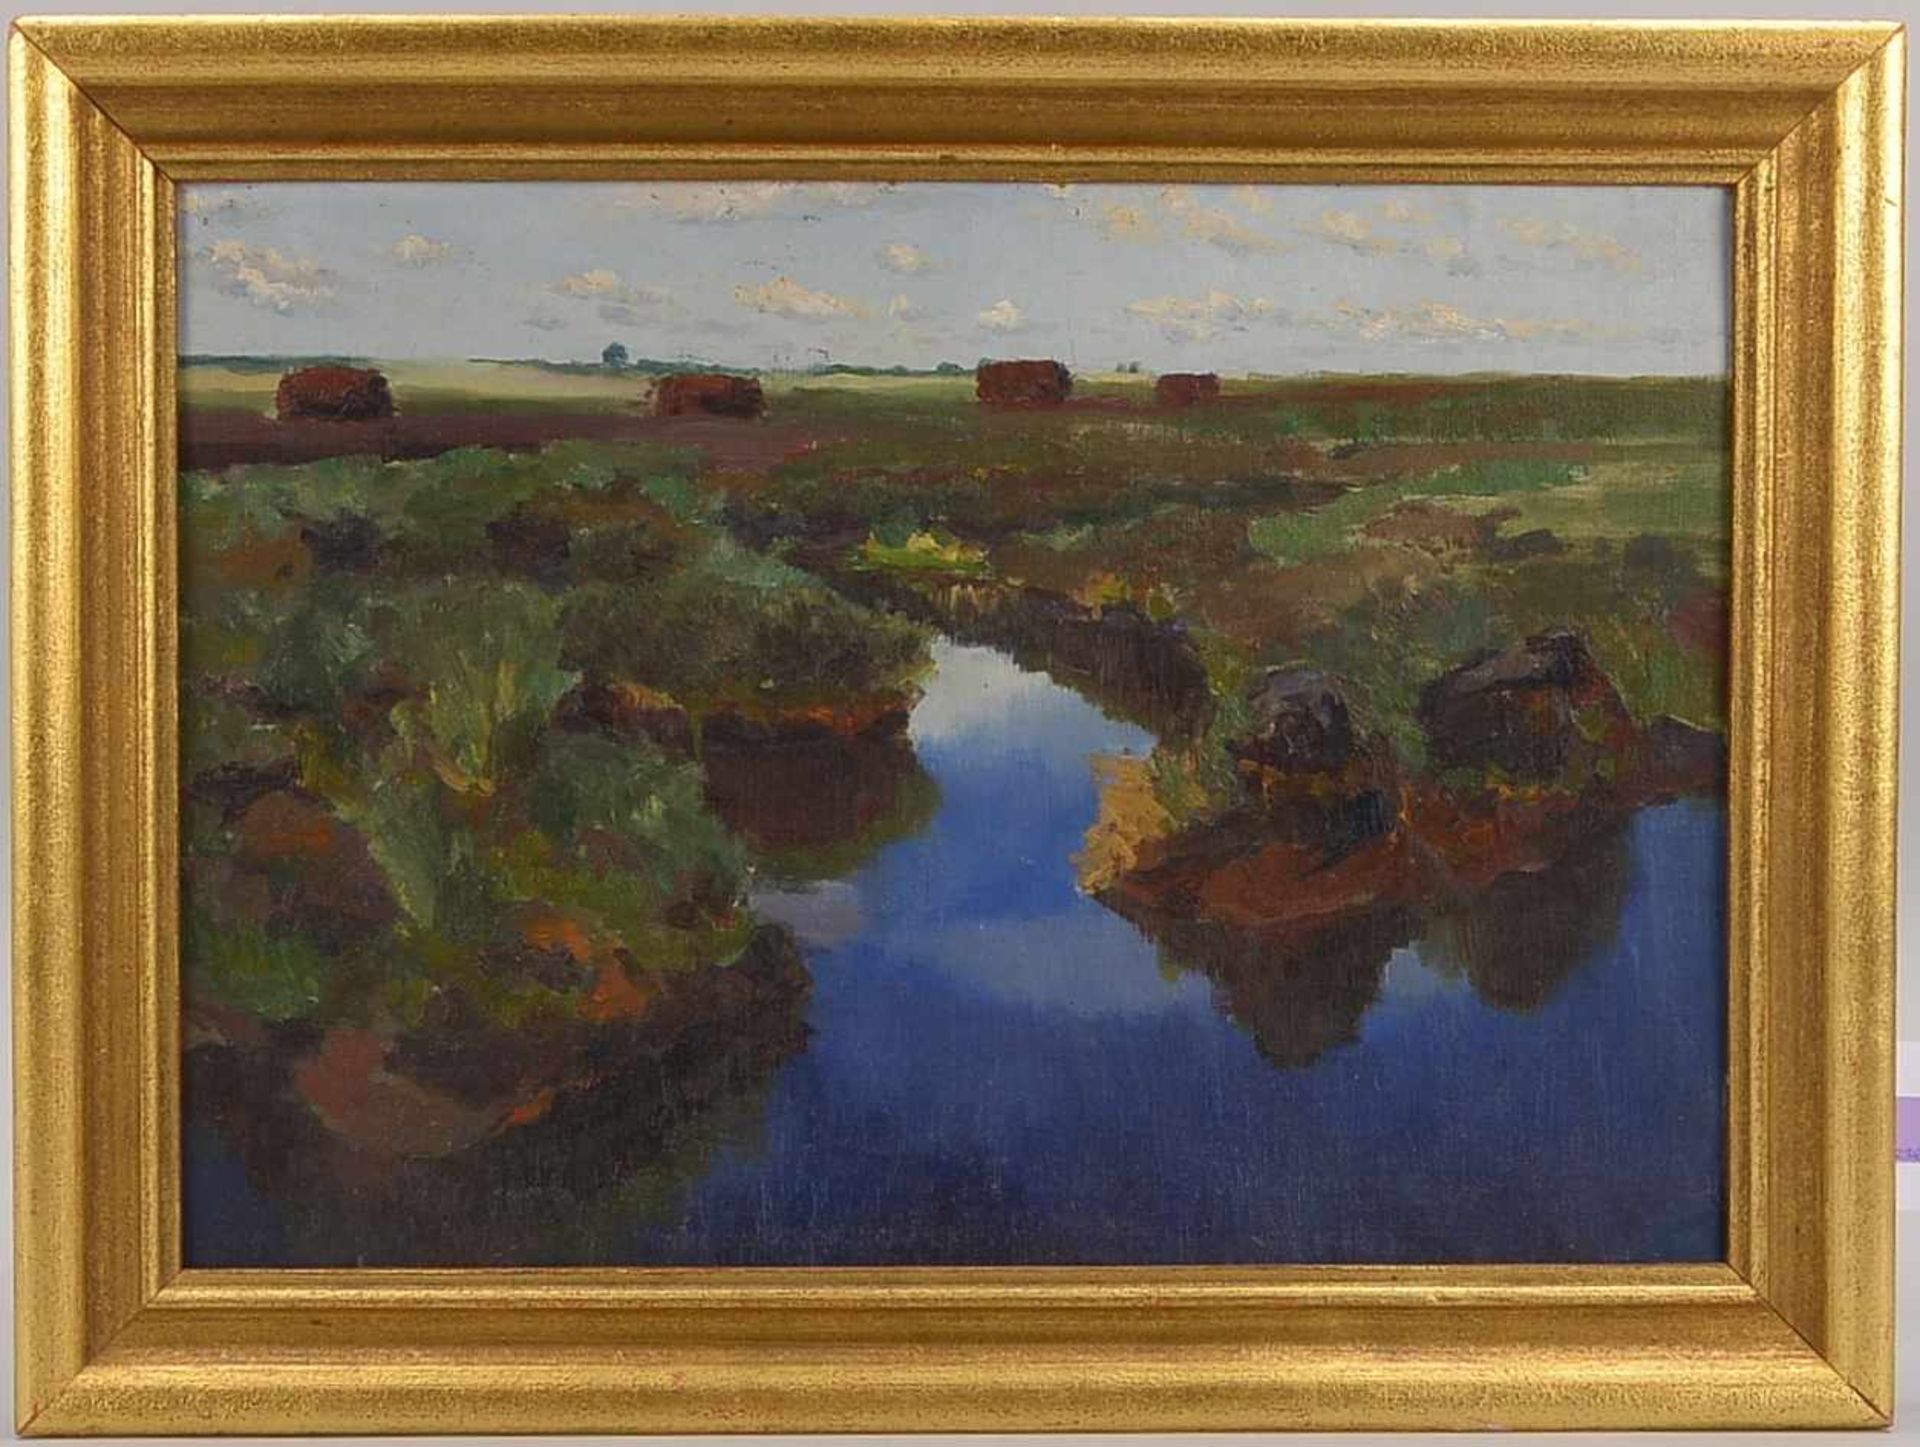 Gemälde, 'Moorgraben', Öl/Lw, unsigniert; Maße 36 x 51 cm